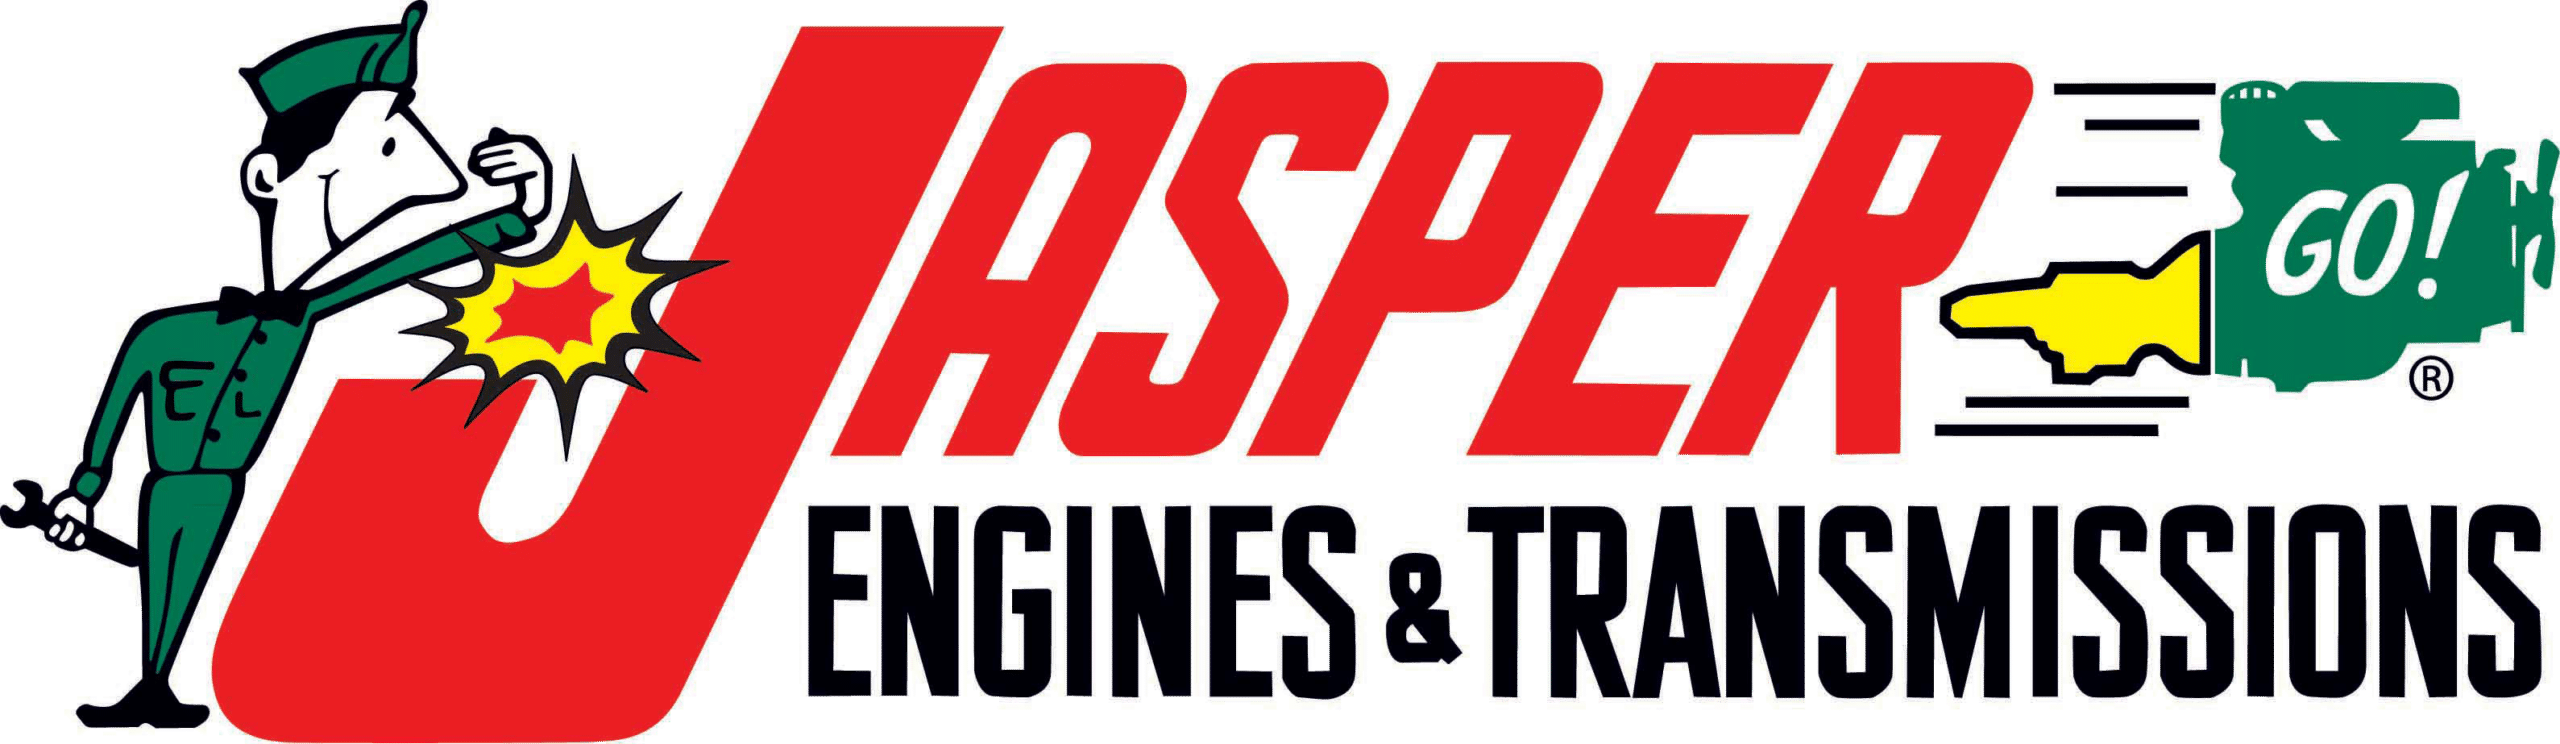 Jasper Engines and Transmissions Logo